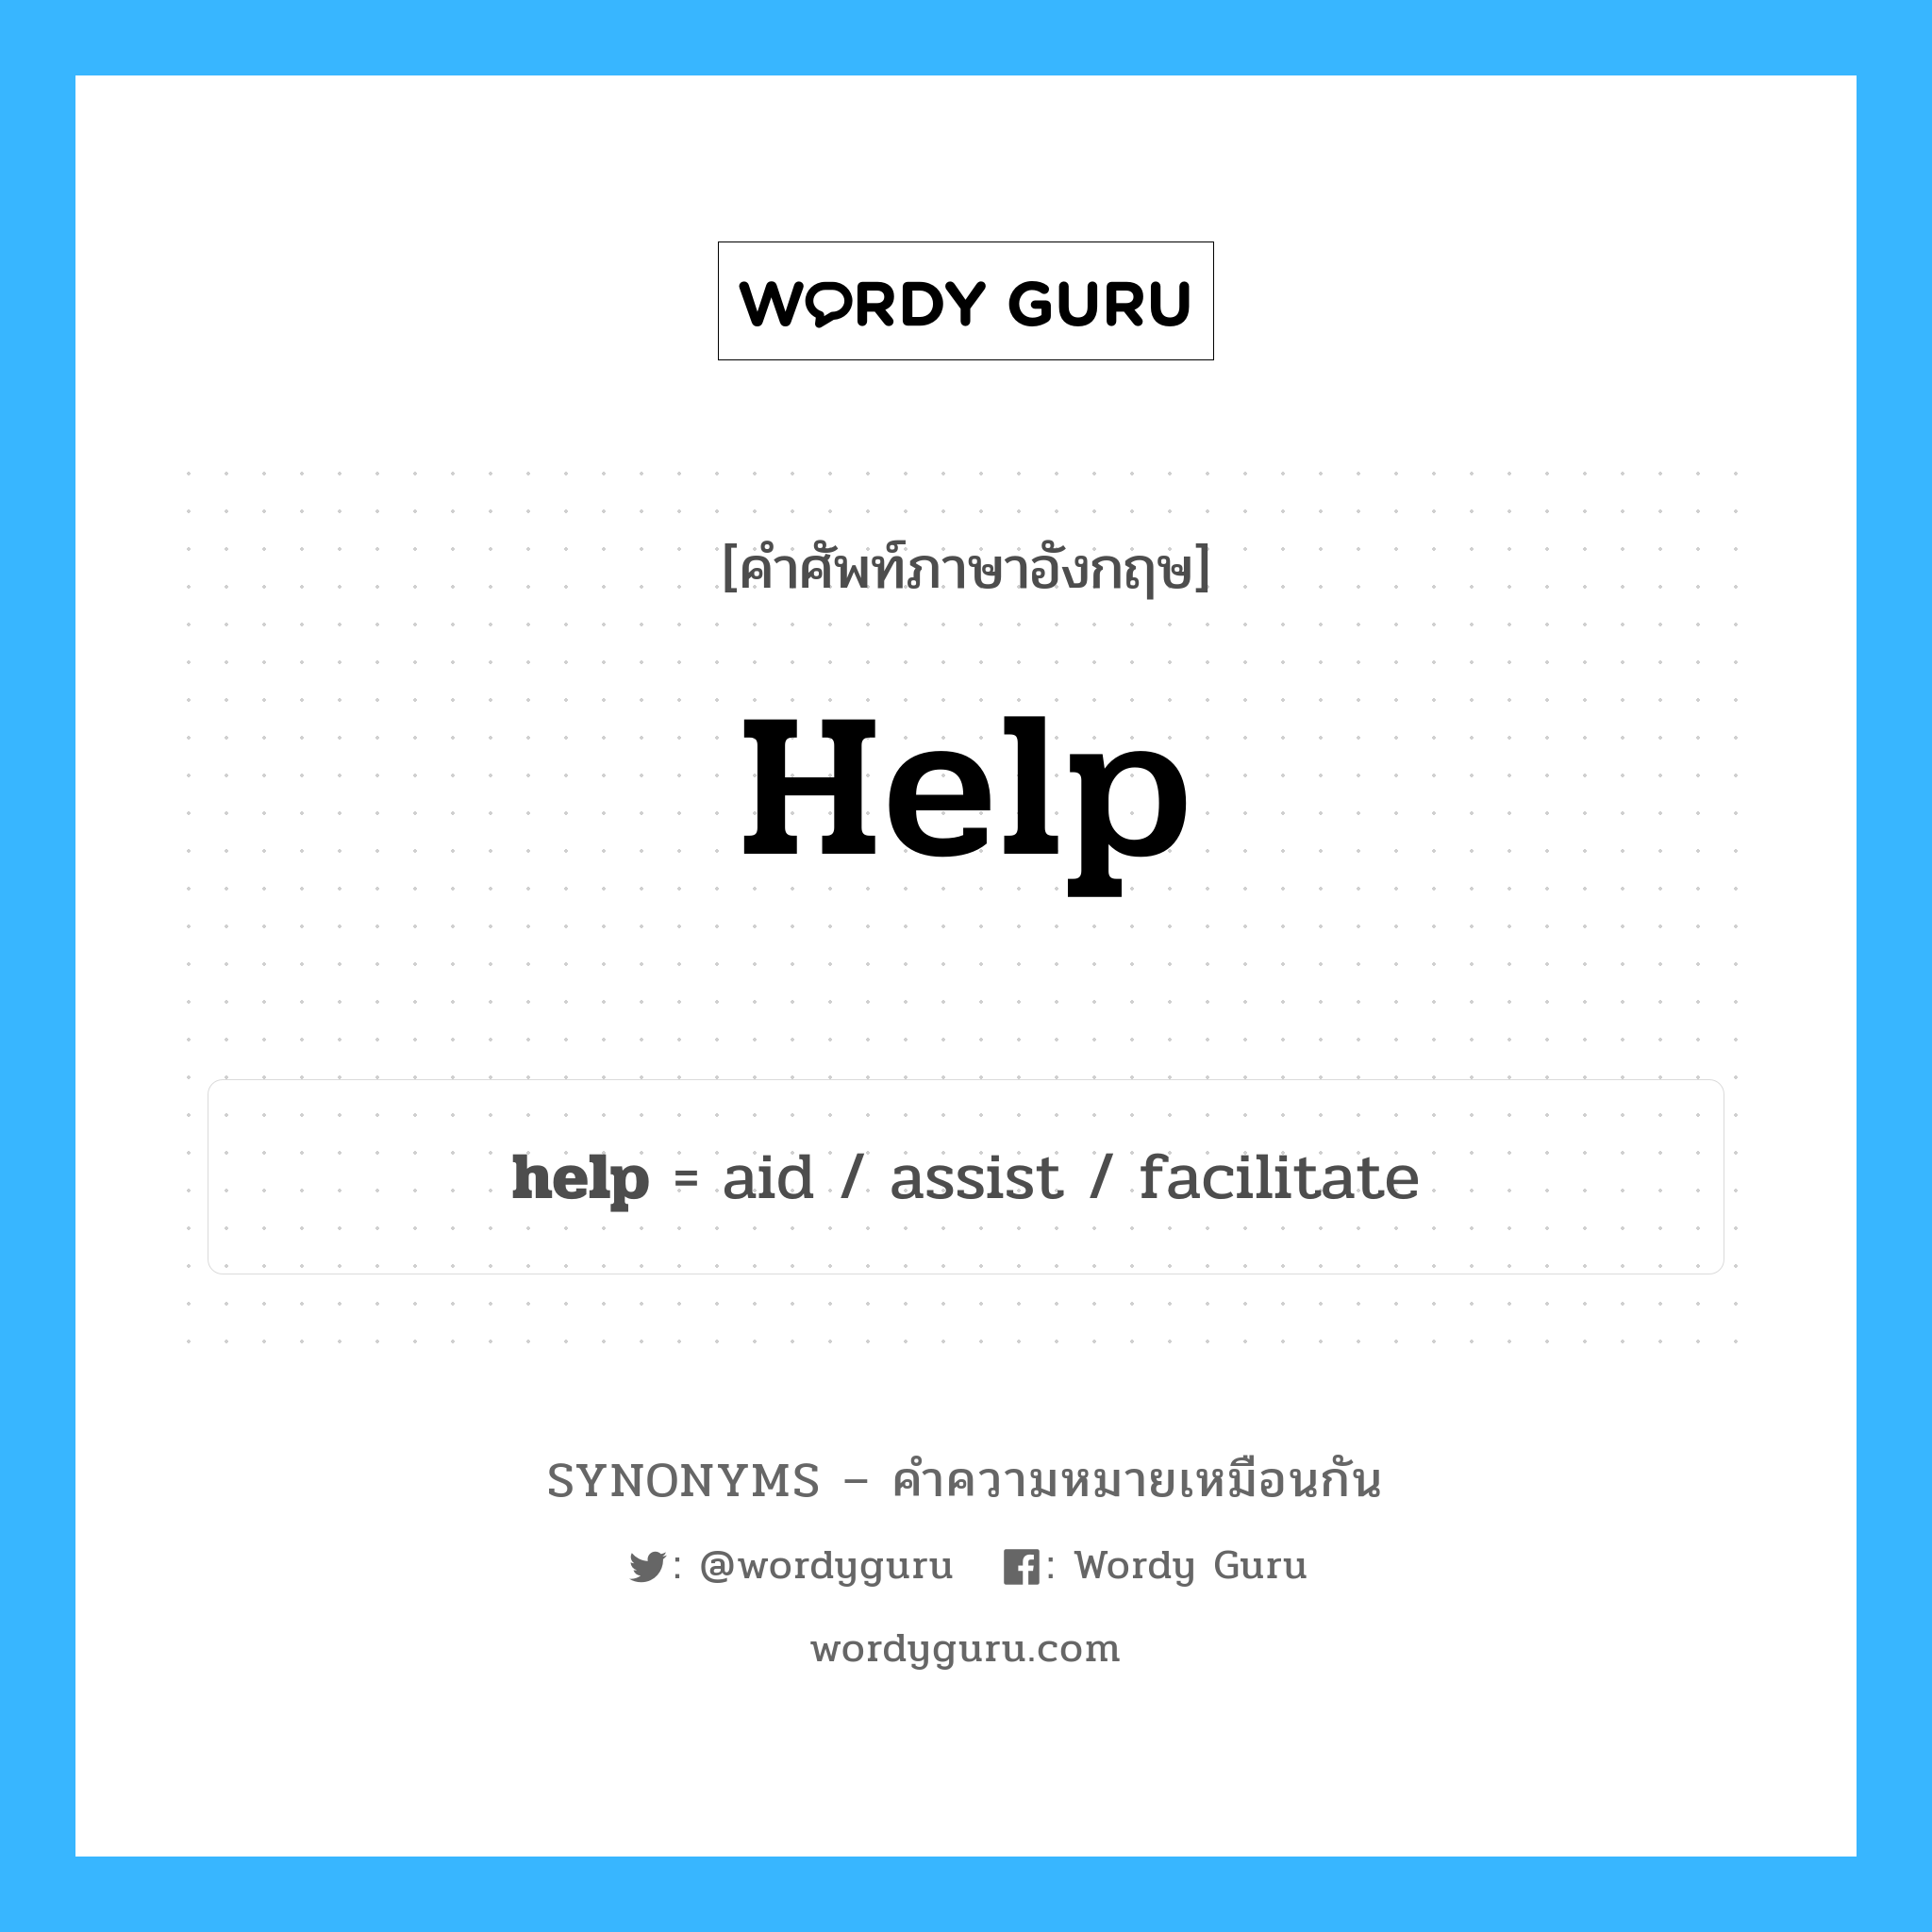 facilitate เป็นหนึ่งใน help และมีคำอื่น ๆ อีกดังนี้, คำศัพท์ภาษาอังกฤษ facilitate ความหมายคล้ายกันกับ help แปลว่า อำนวยความสะดวก หมวด help